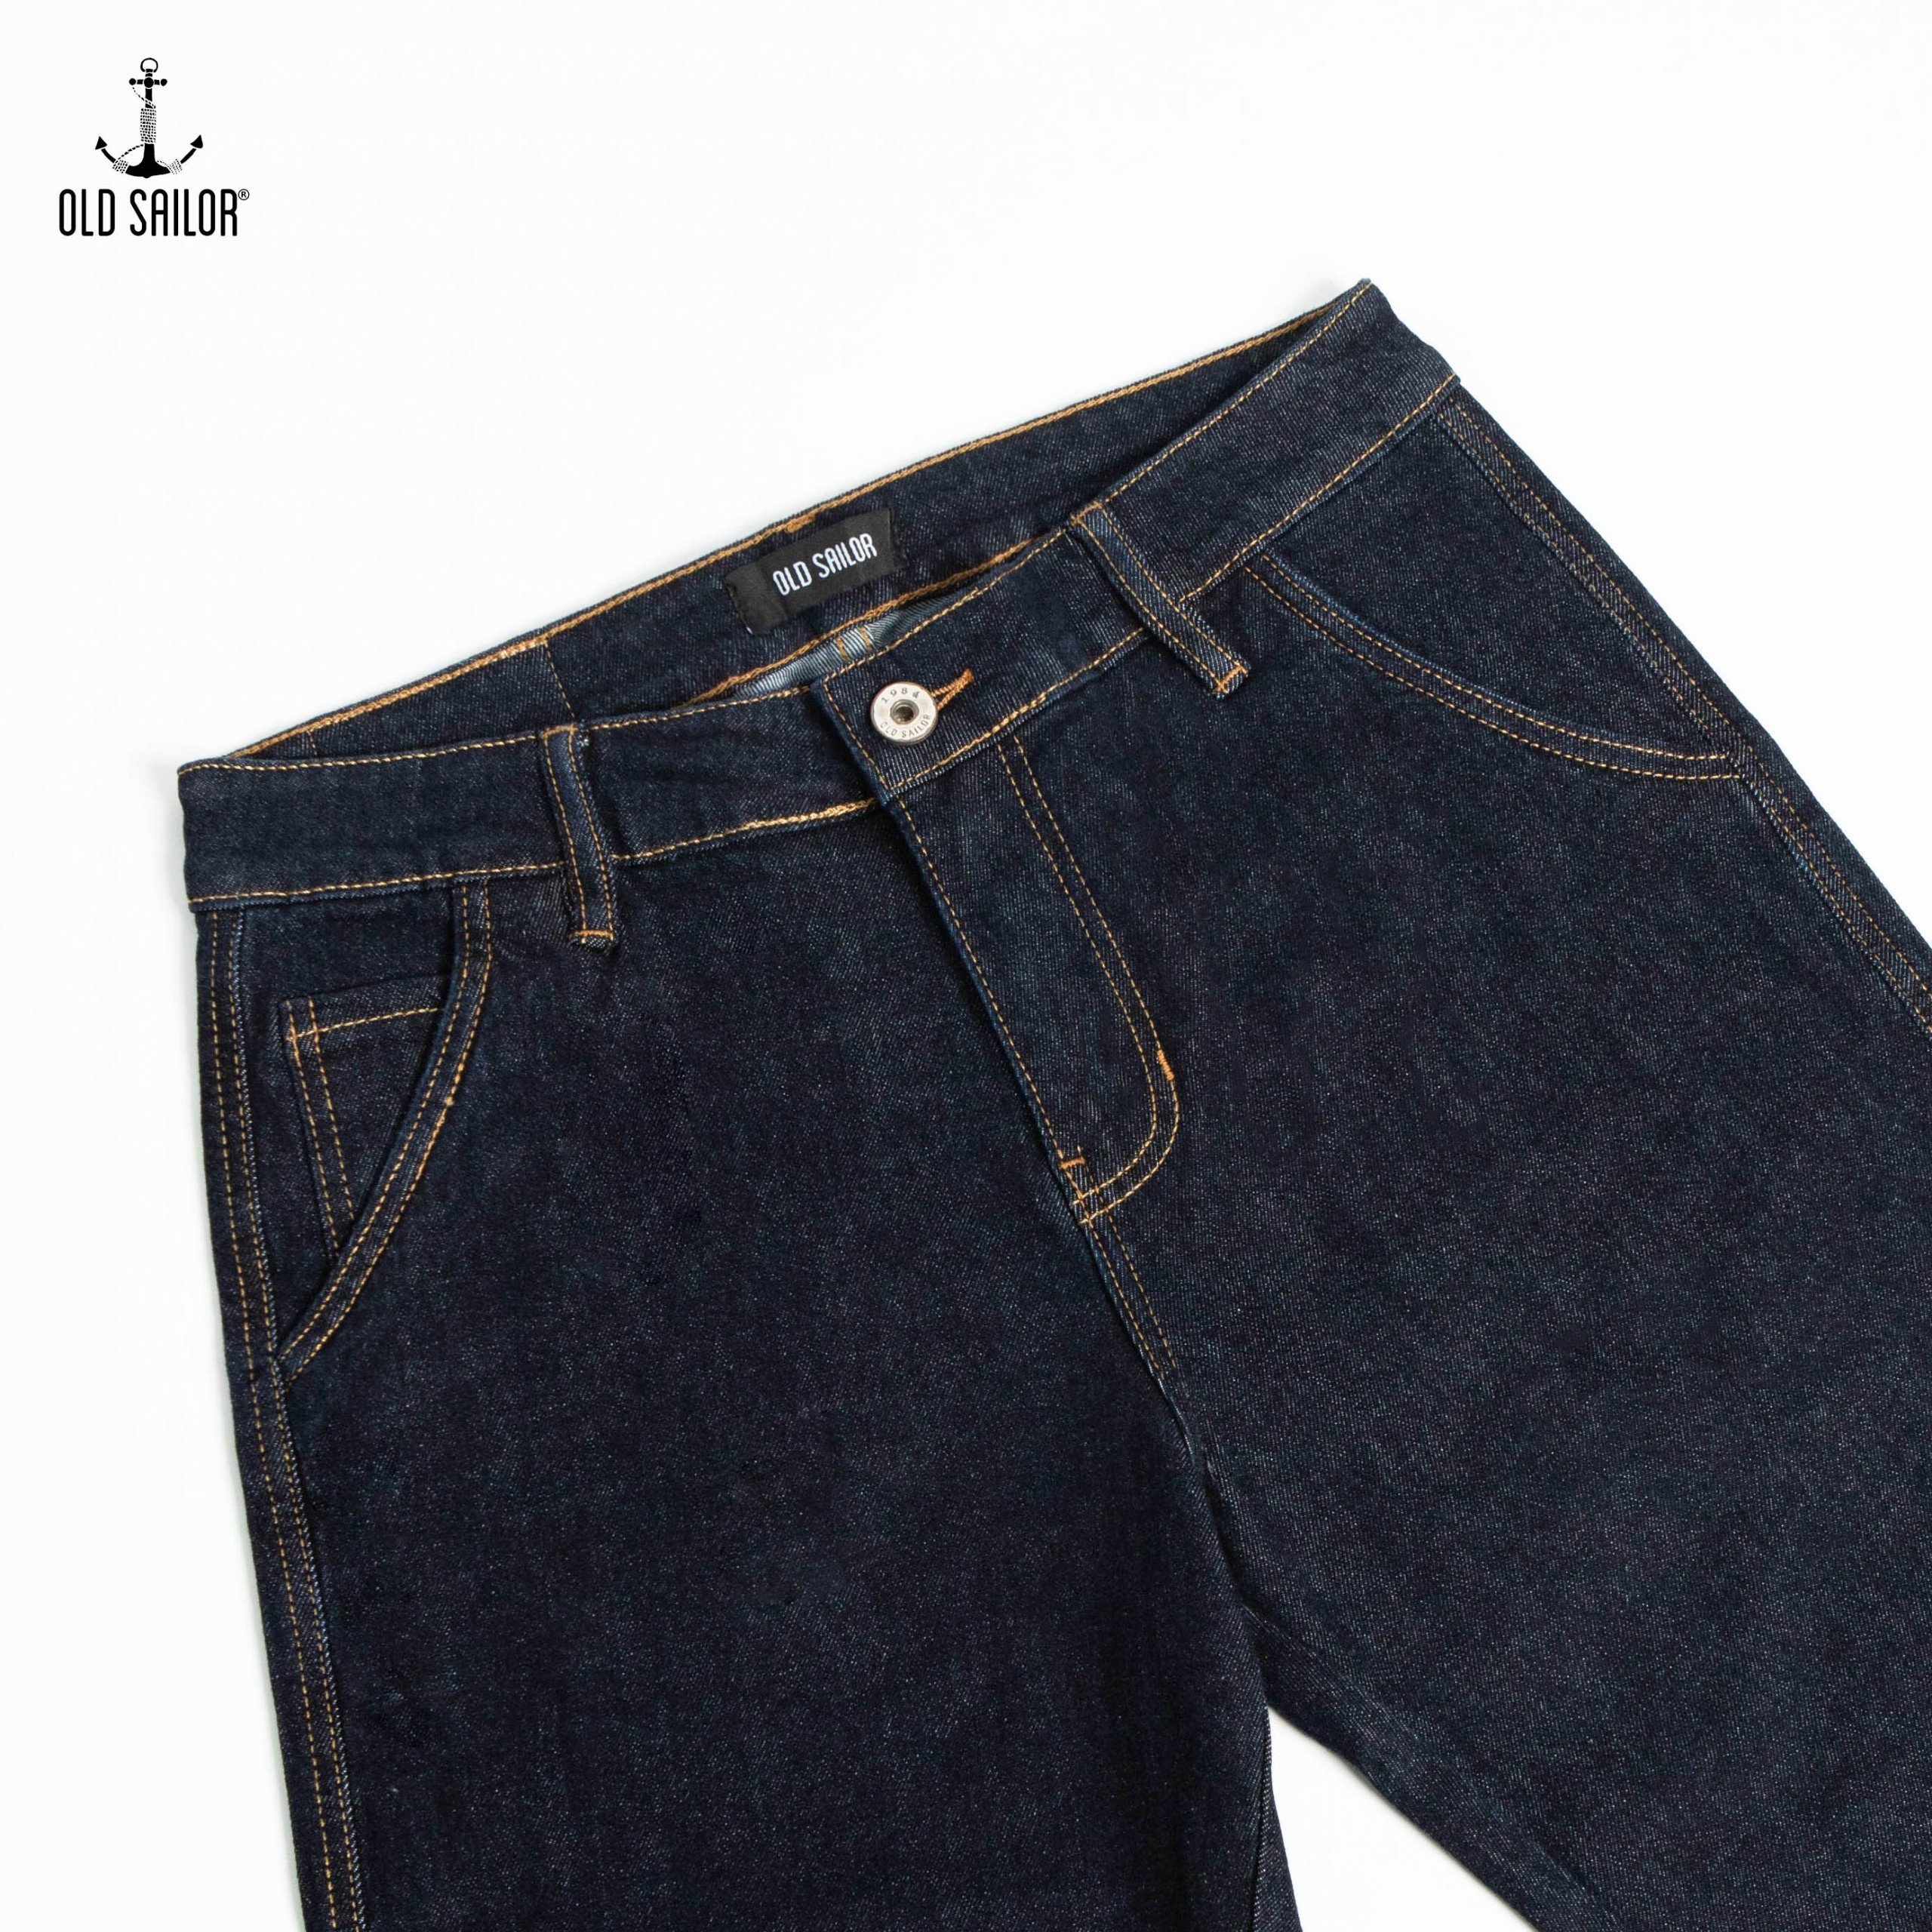 Quần Jeans Premium Straight - 6700 - Big Size Upto 5XL